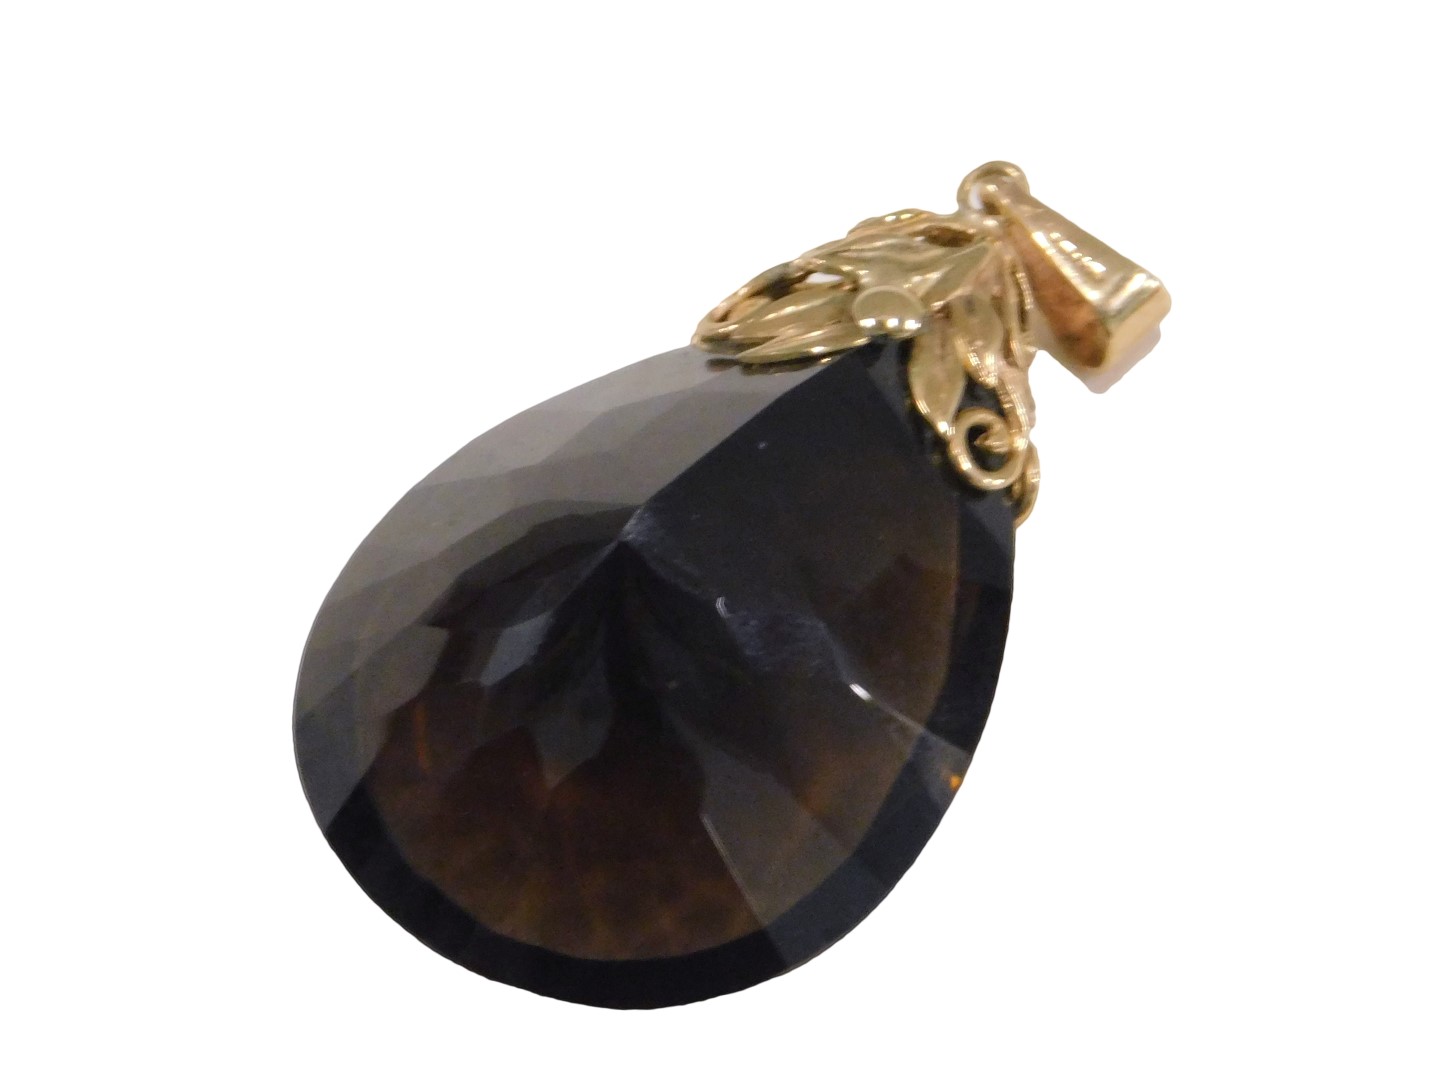 A smokey quartz pendant, the tear drop cut smokey quartz, 4cm high x 2.5cm wide, with a 9ct gold flo